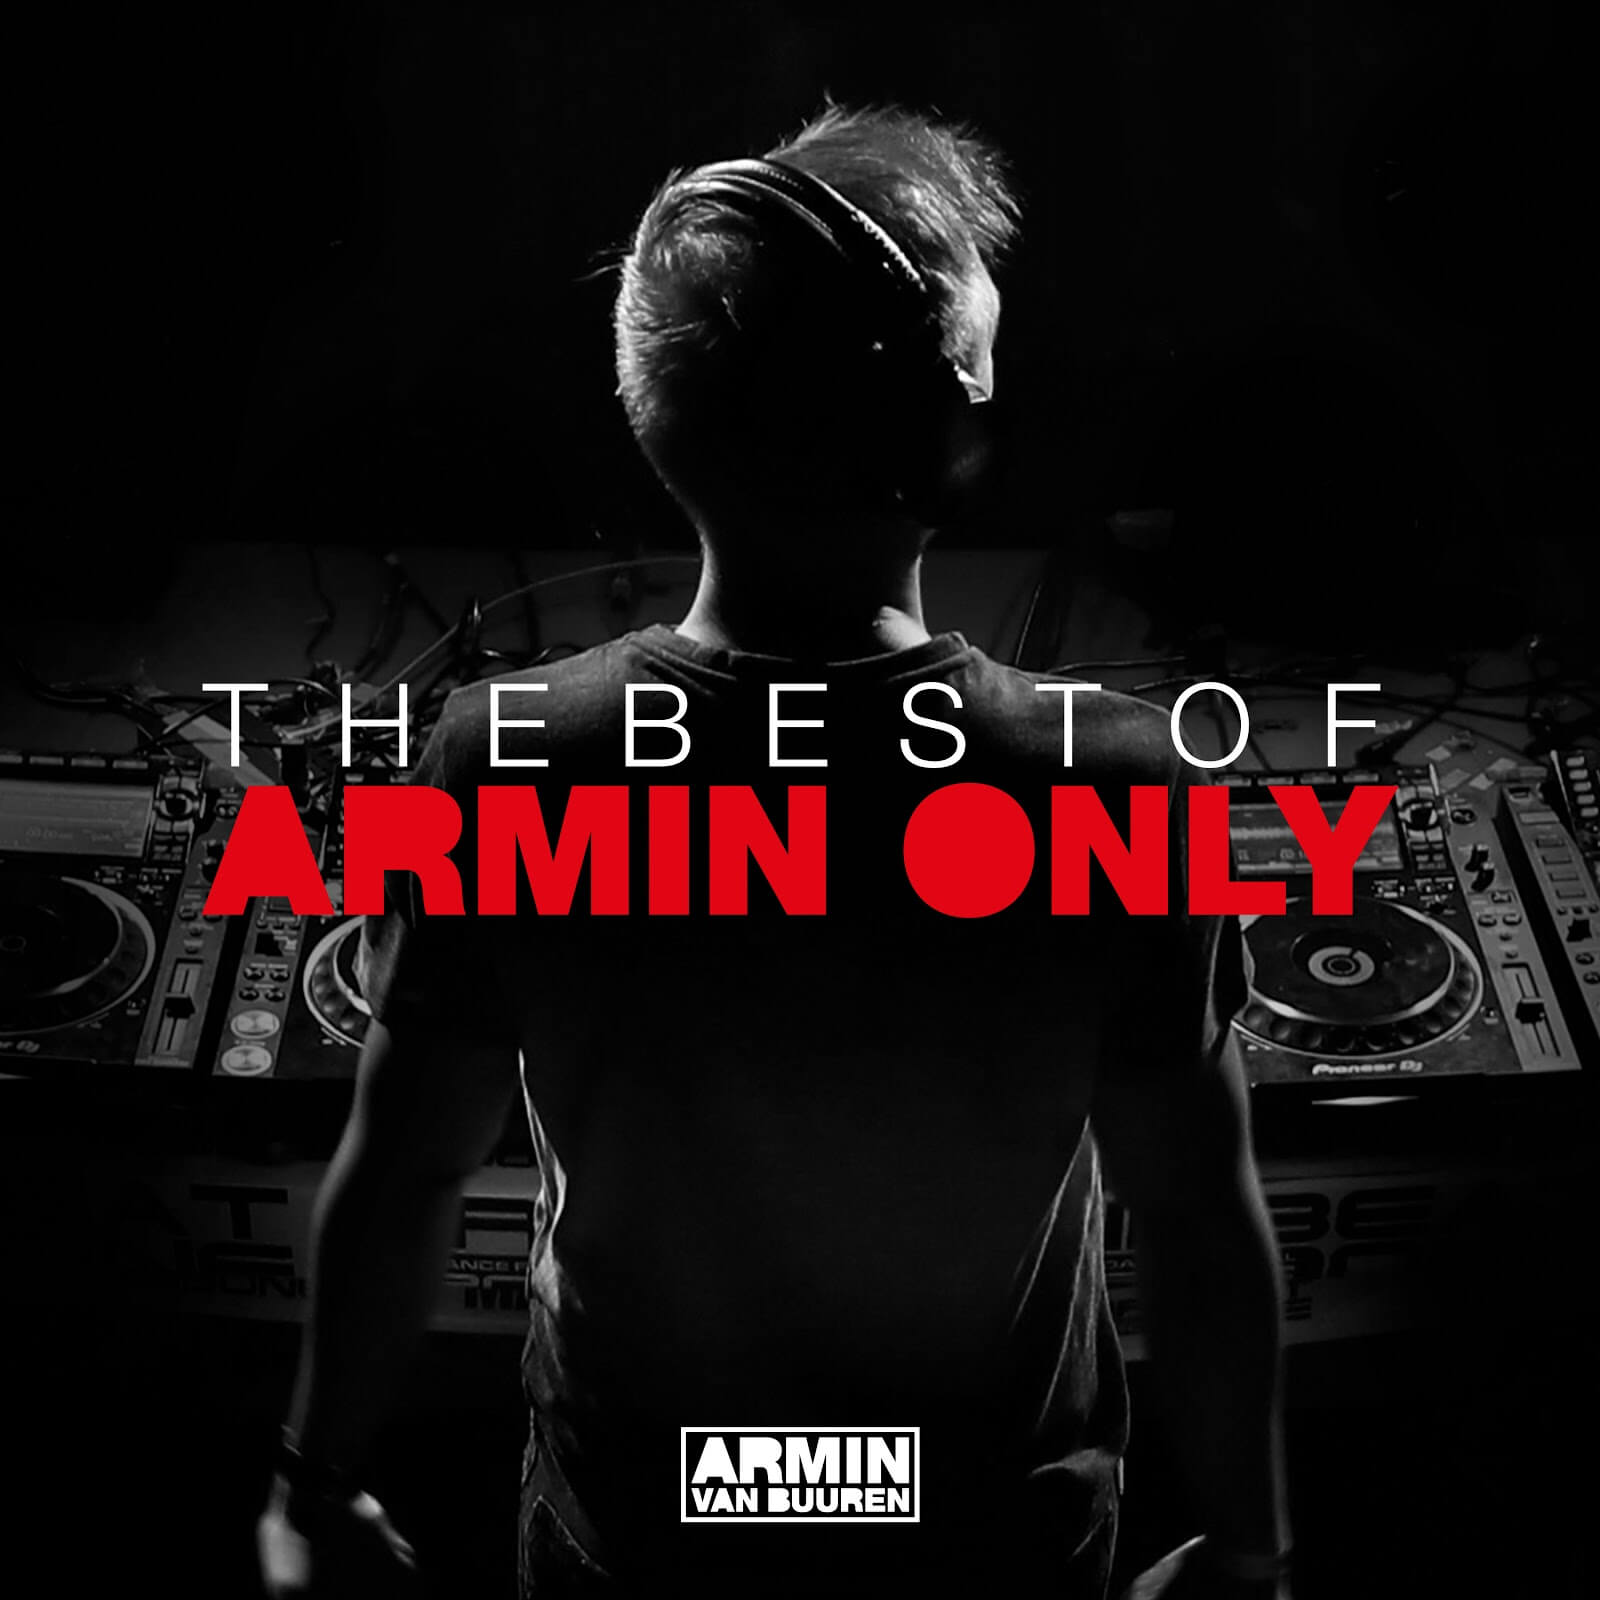 Armin van Buuren announces The Best Of Armin Only album